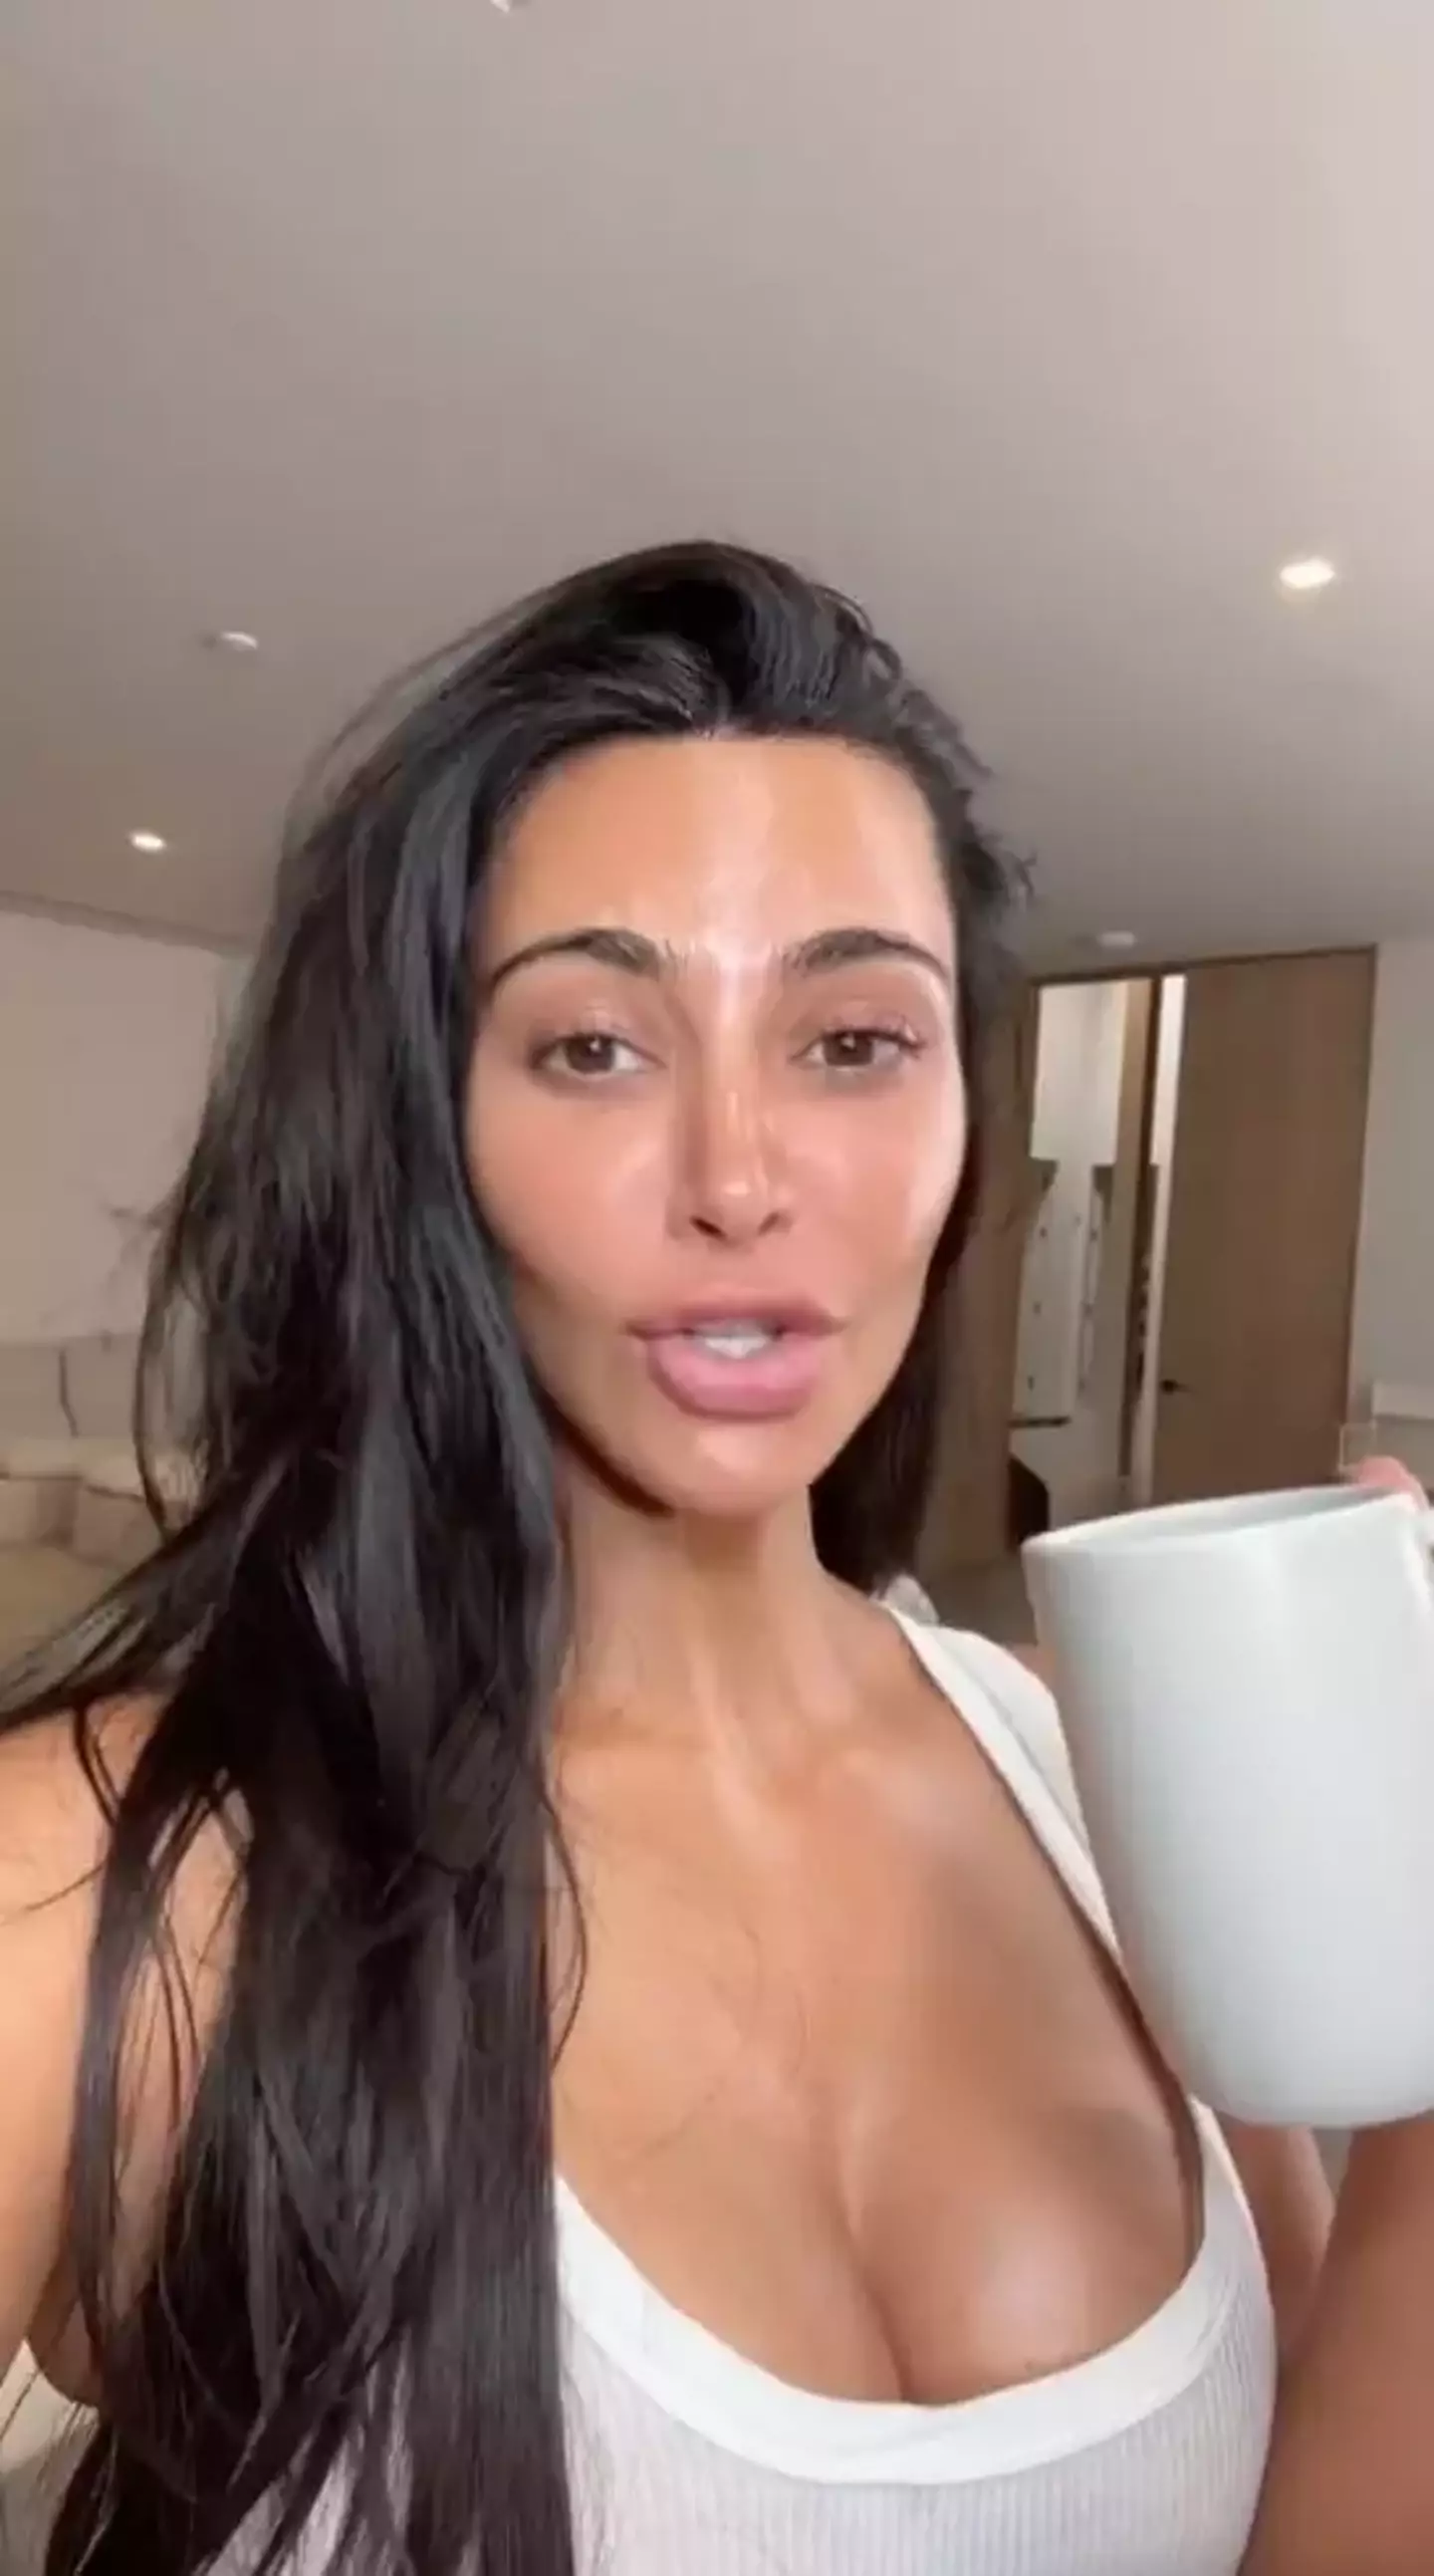 Fans have praised Kardashian for not wearing makeup before.